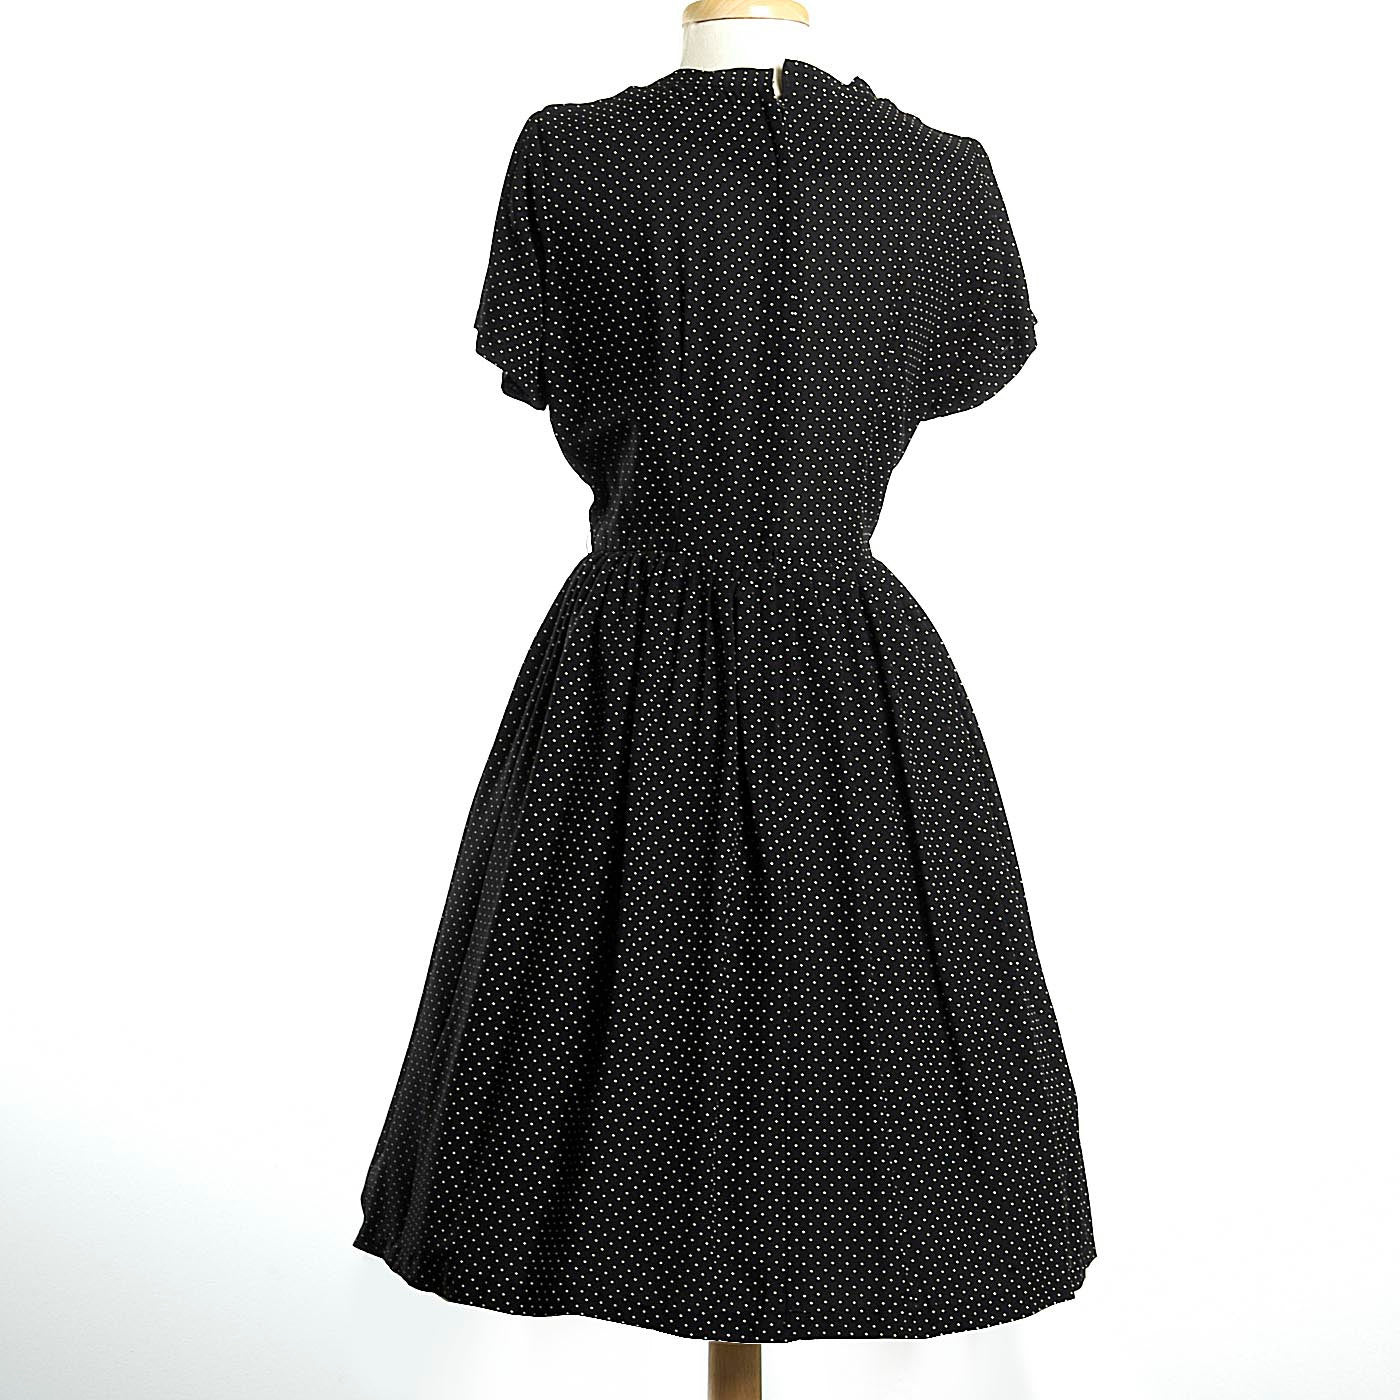 1950s Black Knit Dress with White Polka Dots